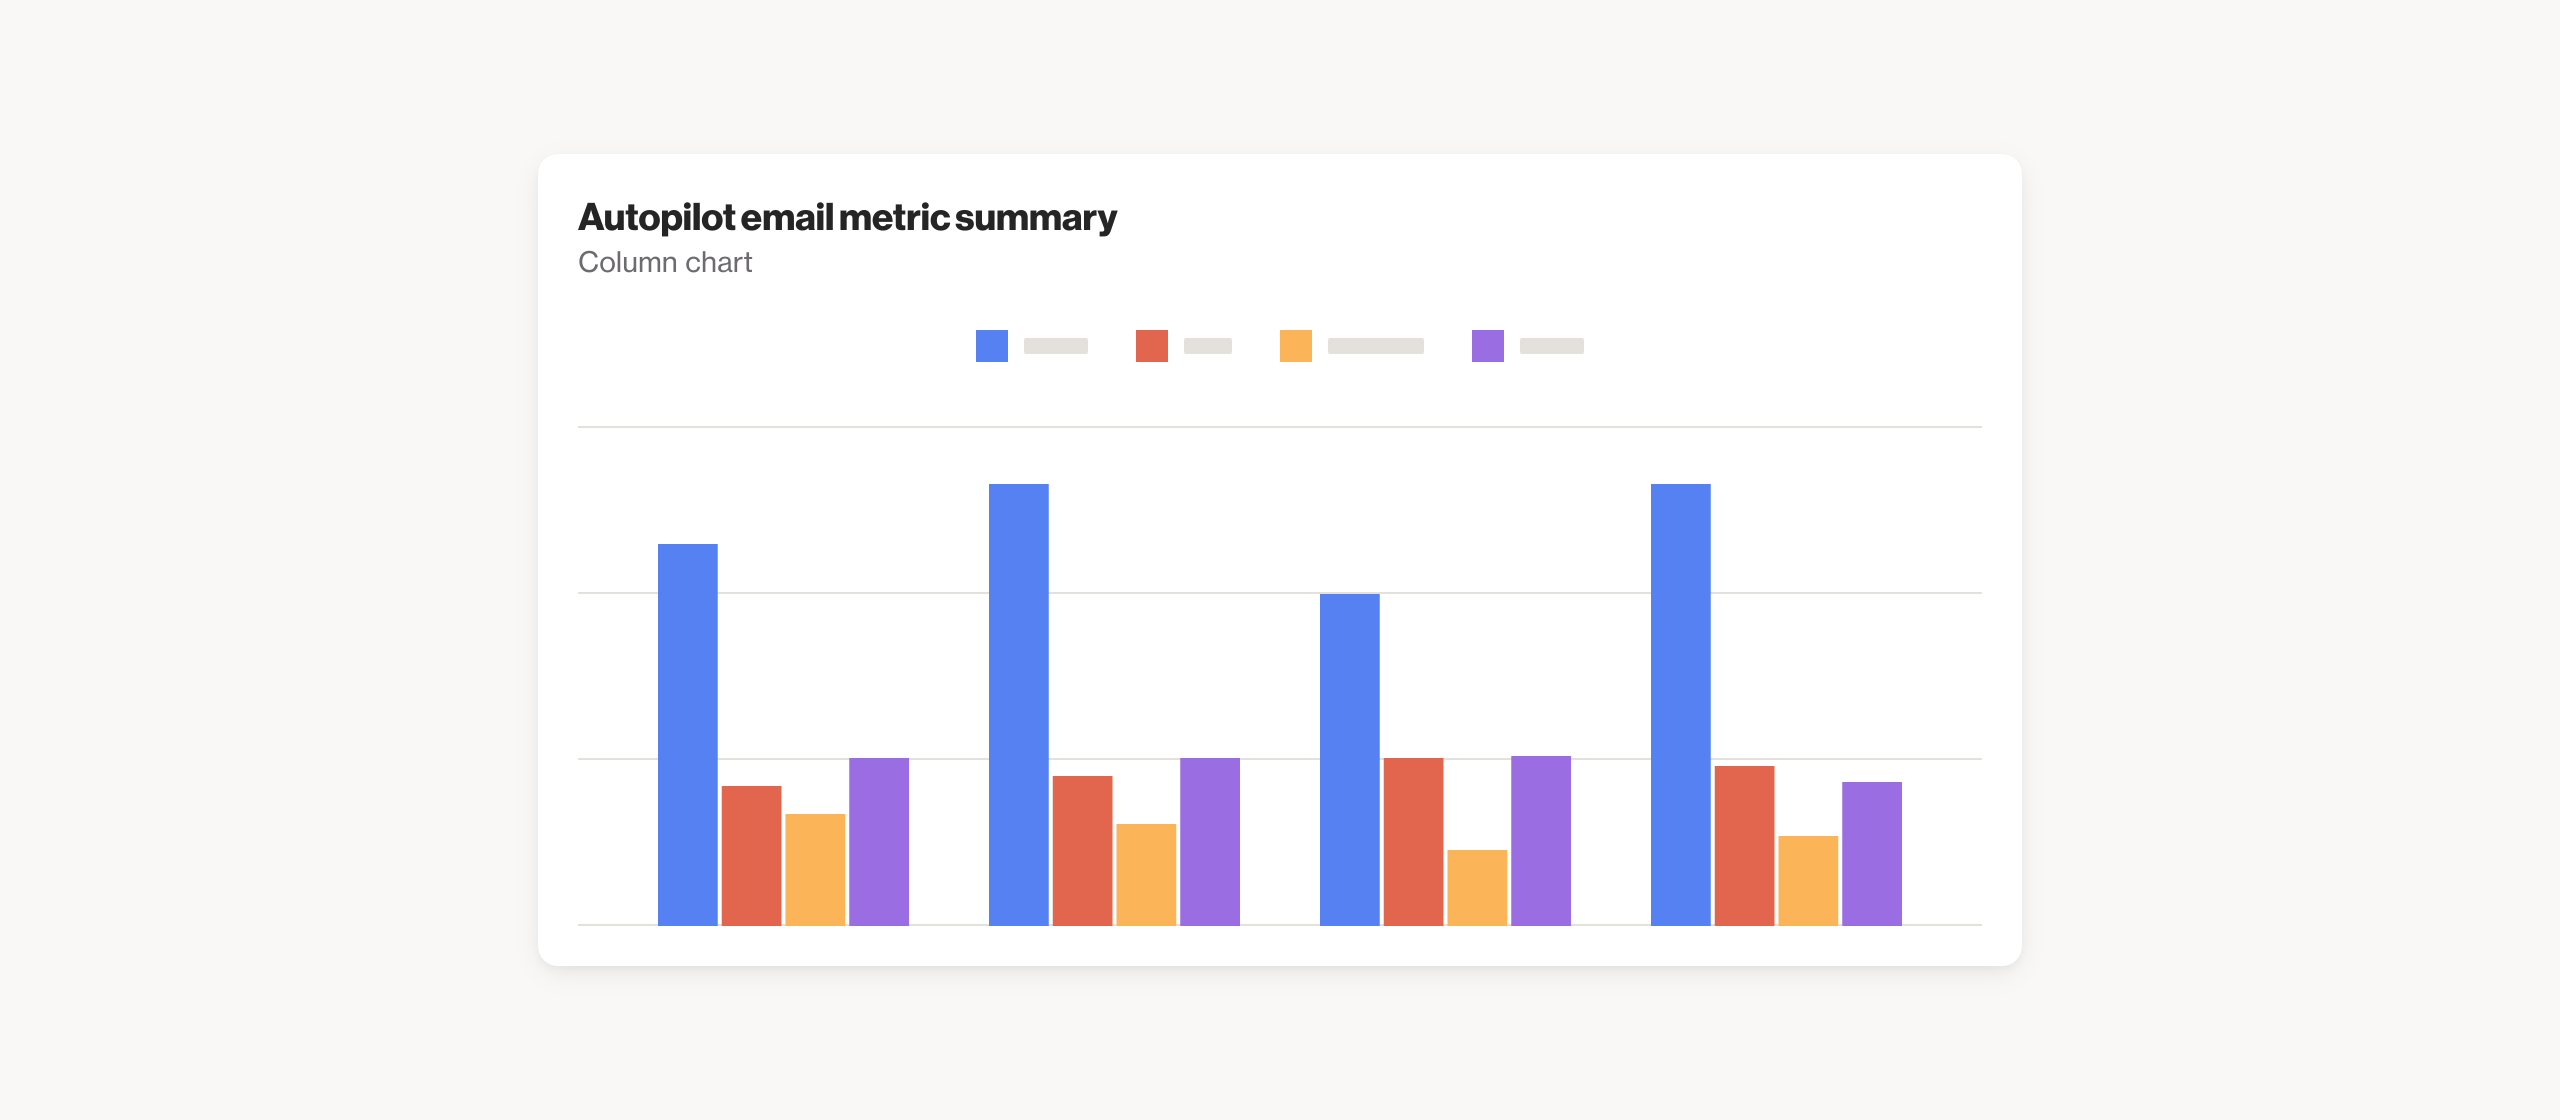 Autopilot email metric summary